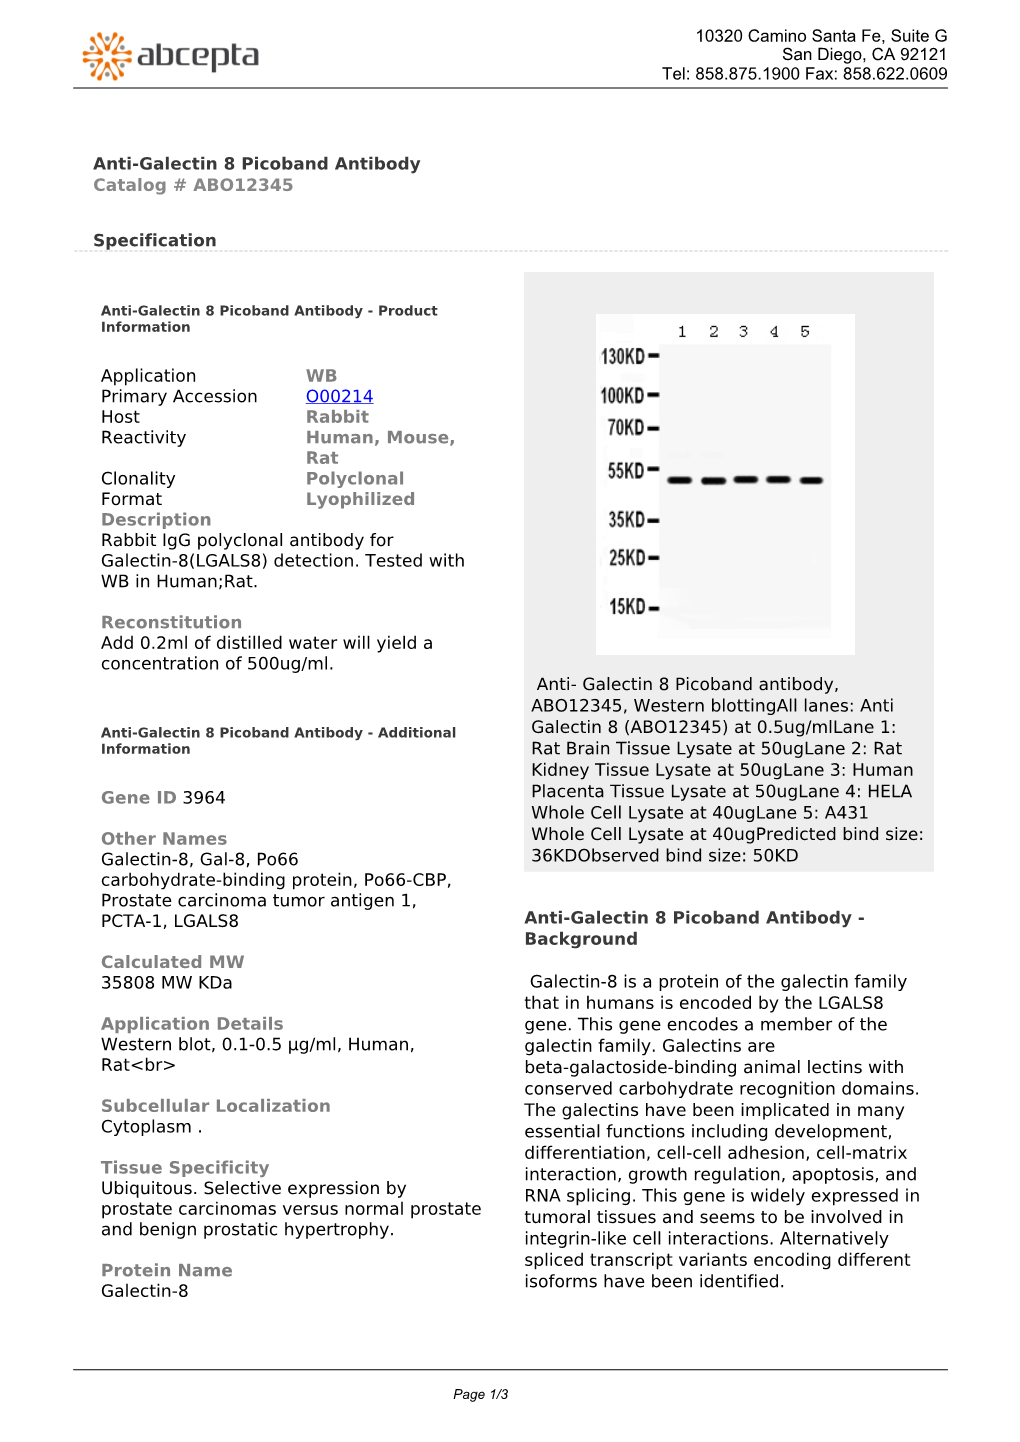 Anti-Galectin 8 Picoband Antibody Catalog # ABO12345